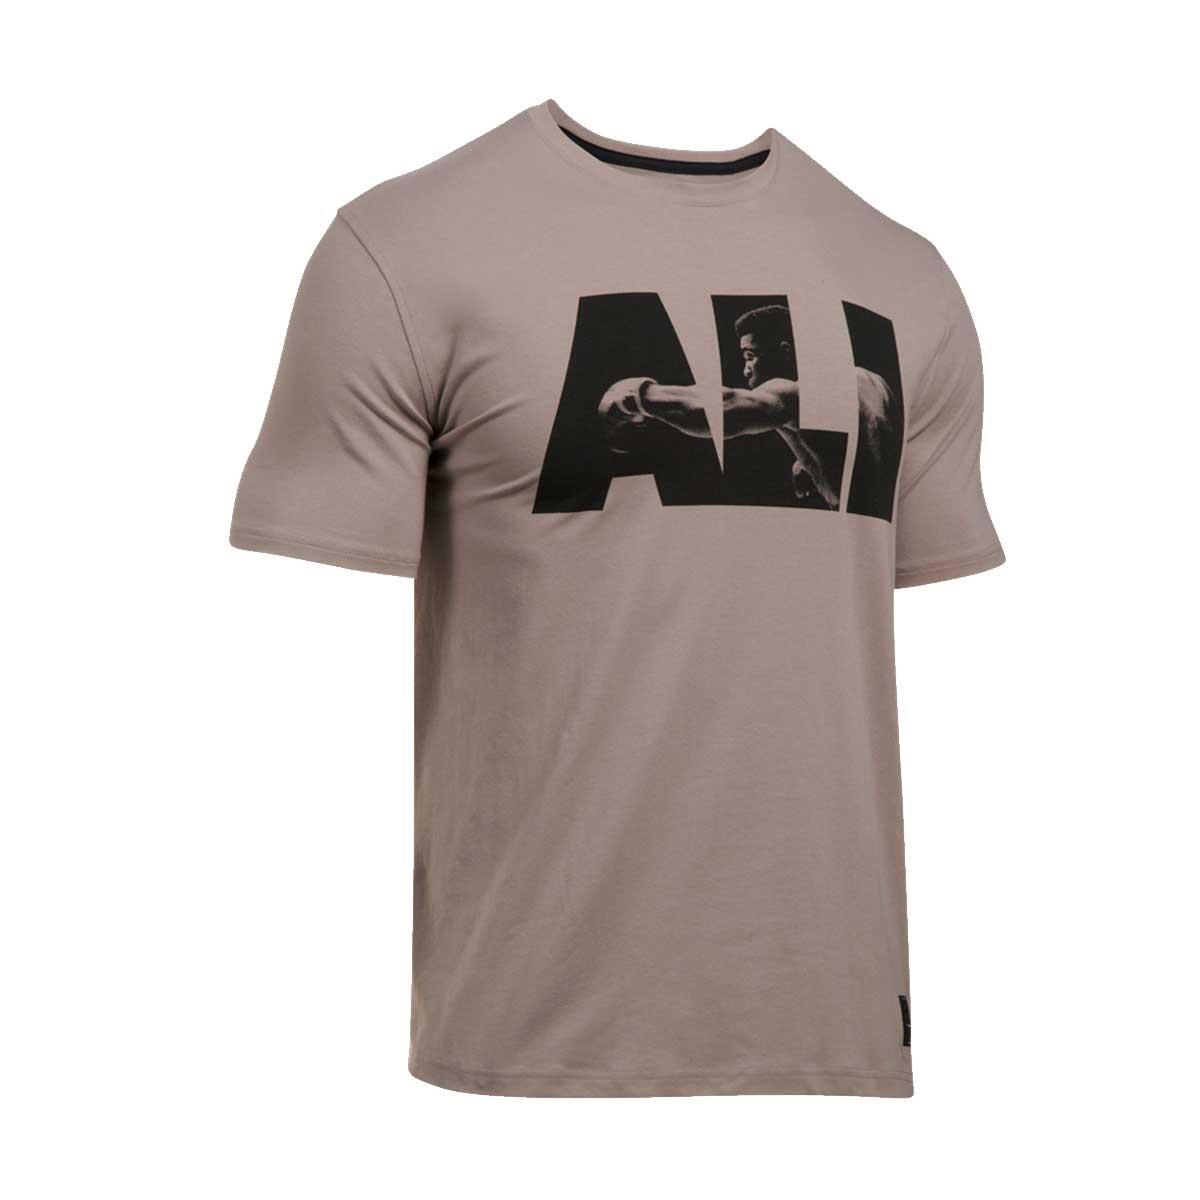 anunciar tempo banco Camiseta Under Armour Ali Rumble Jab Masculino